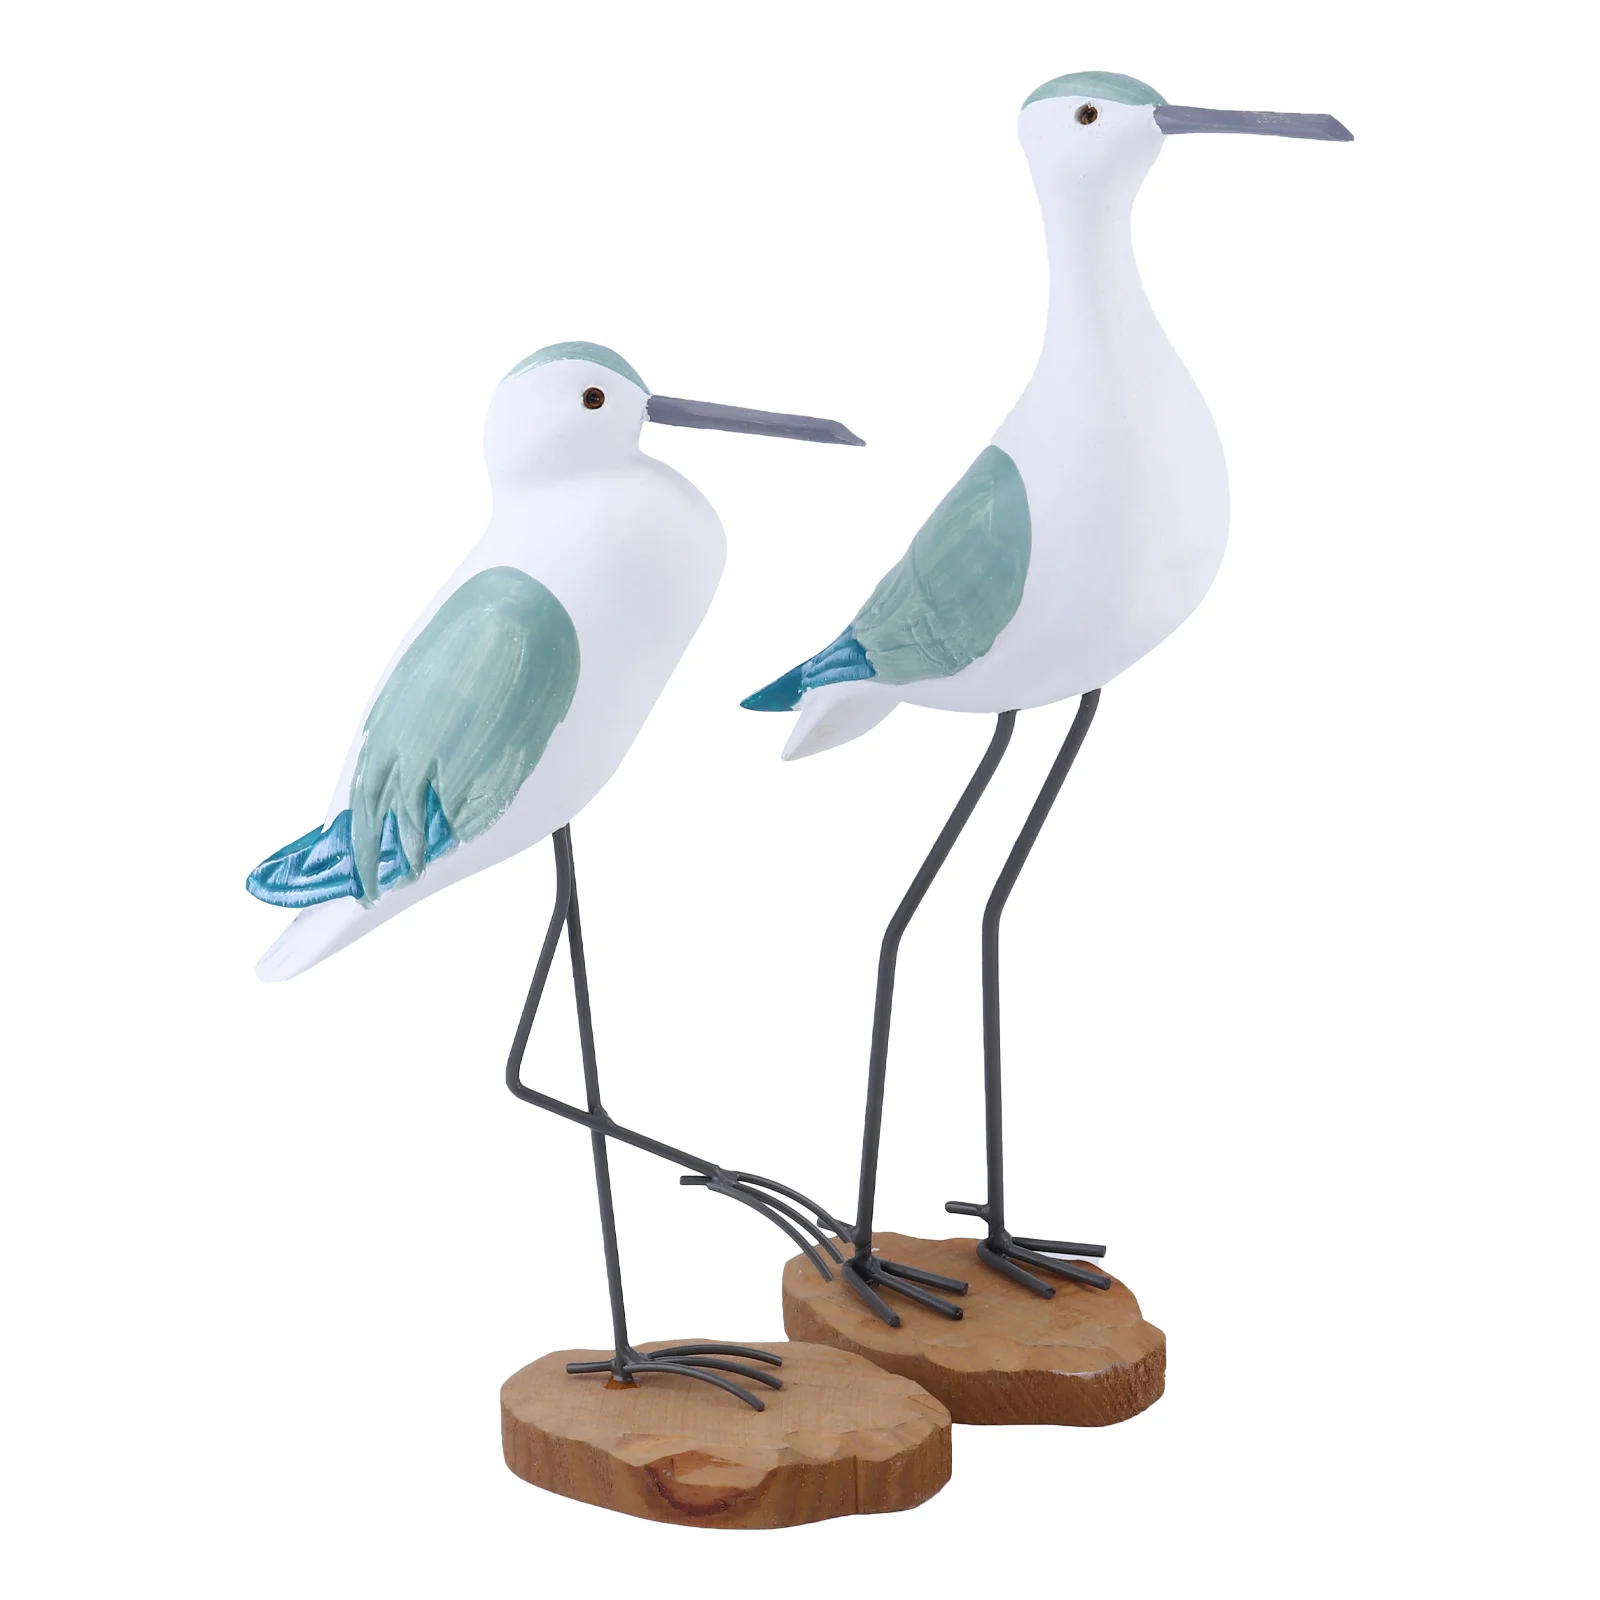 

2 Pcs Seagull Ornaments Wooden Craft Desktop Decorations Home Sculpture Kids' Room Décor Decorate